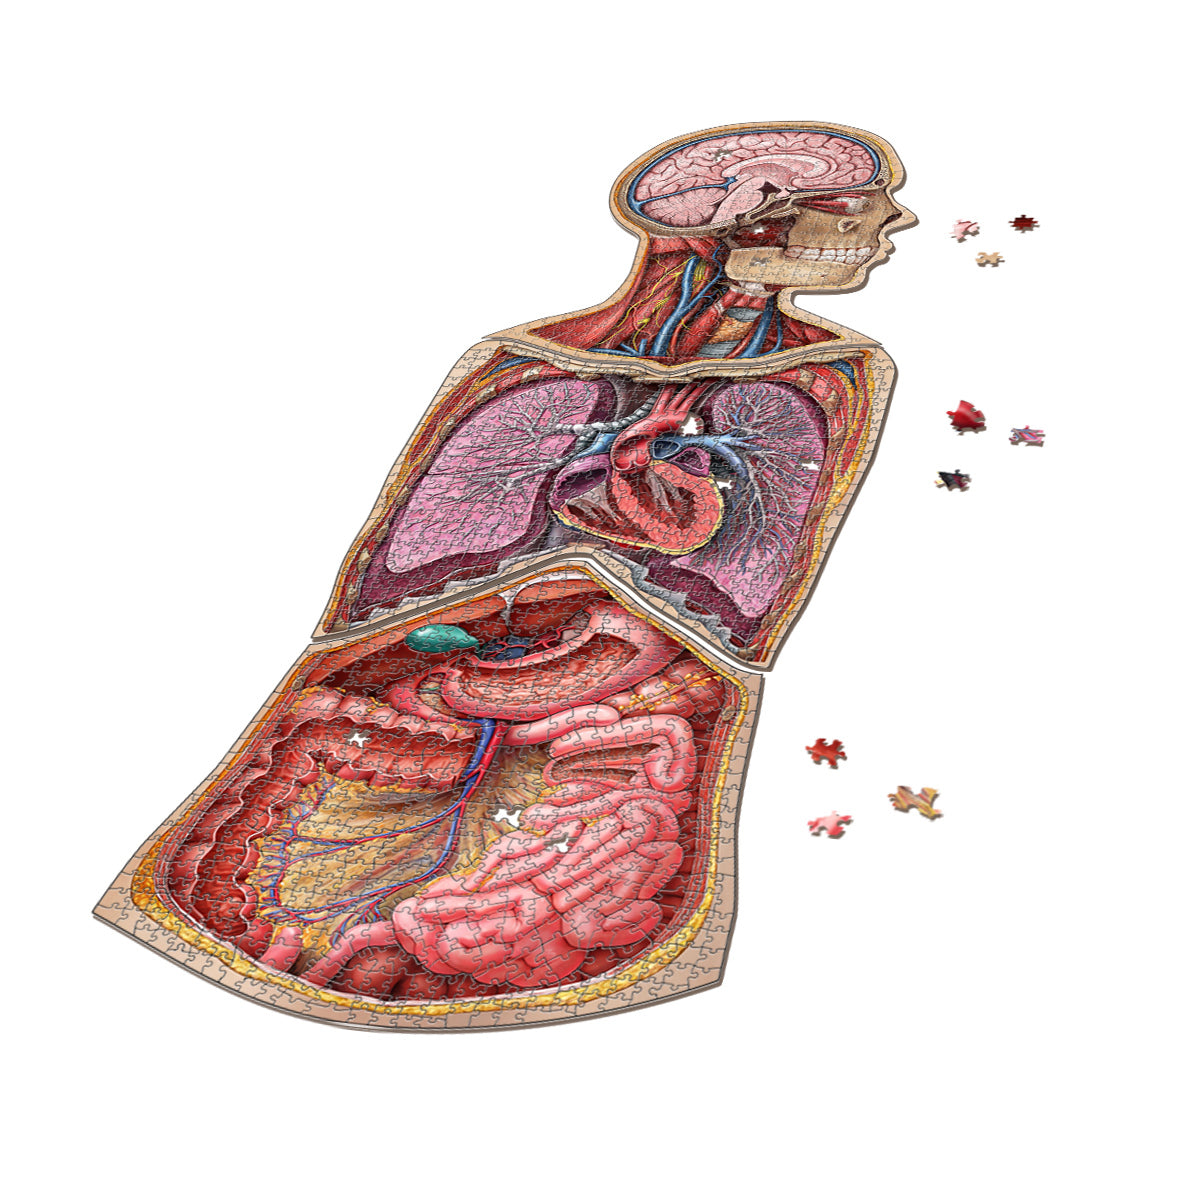 Dr Livingston Human Anatomy 500 Piece 21" Thorax Heart Education Jigsaw Puzzle 